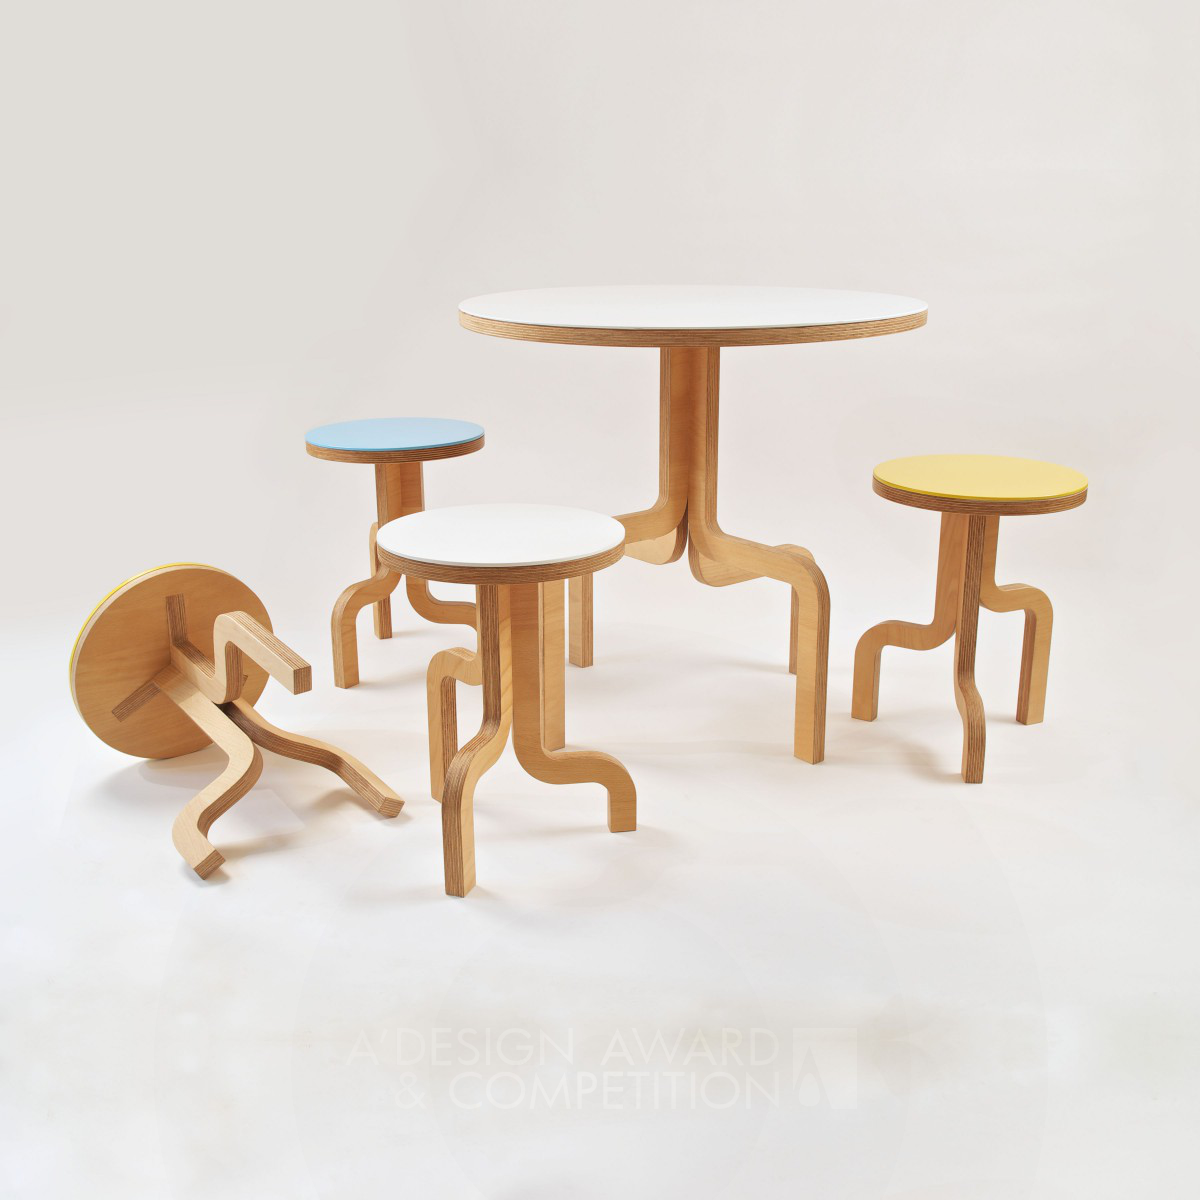 Twig <b>stool, bar stool, table